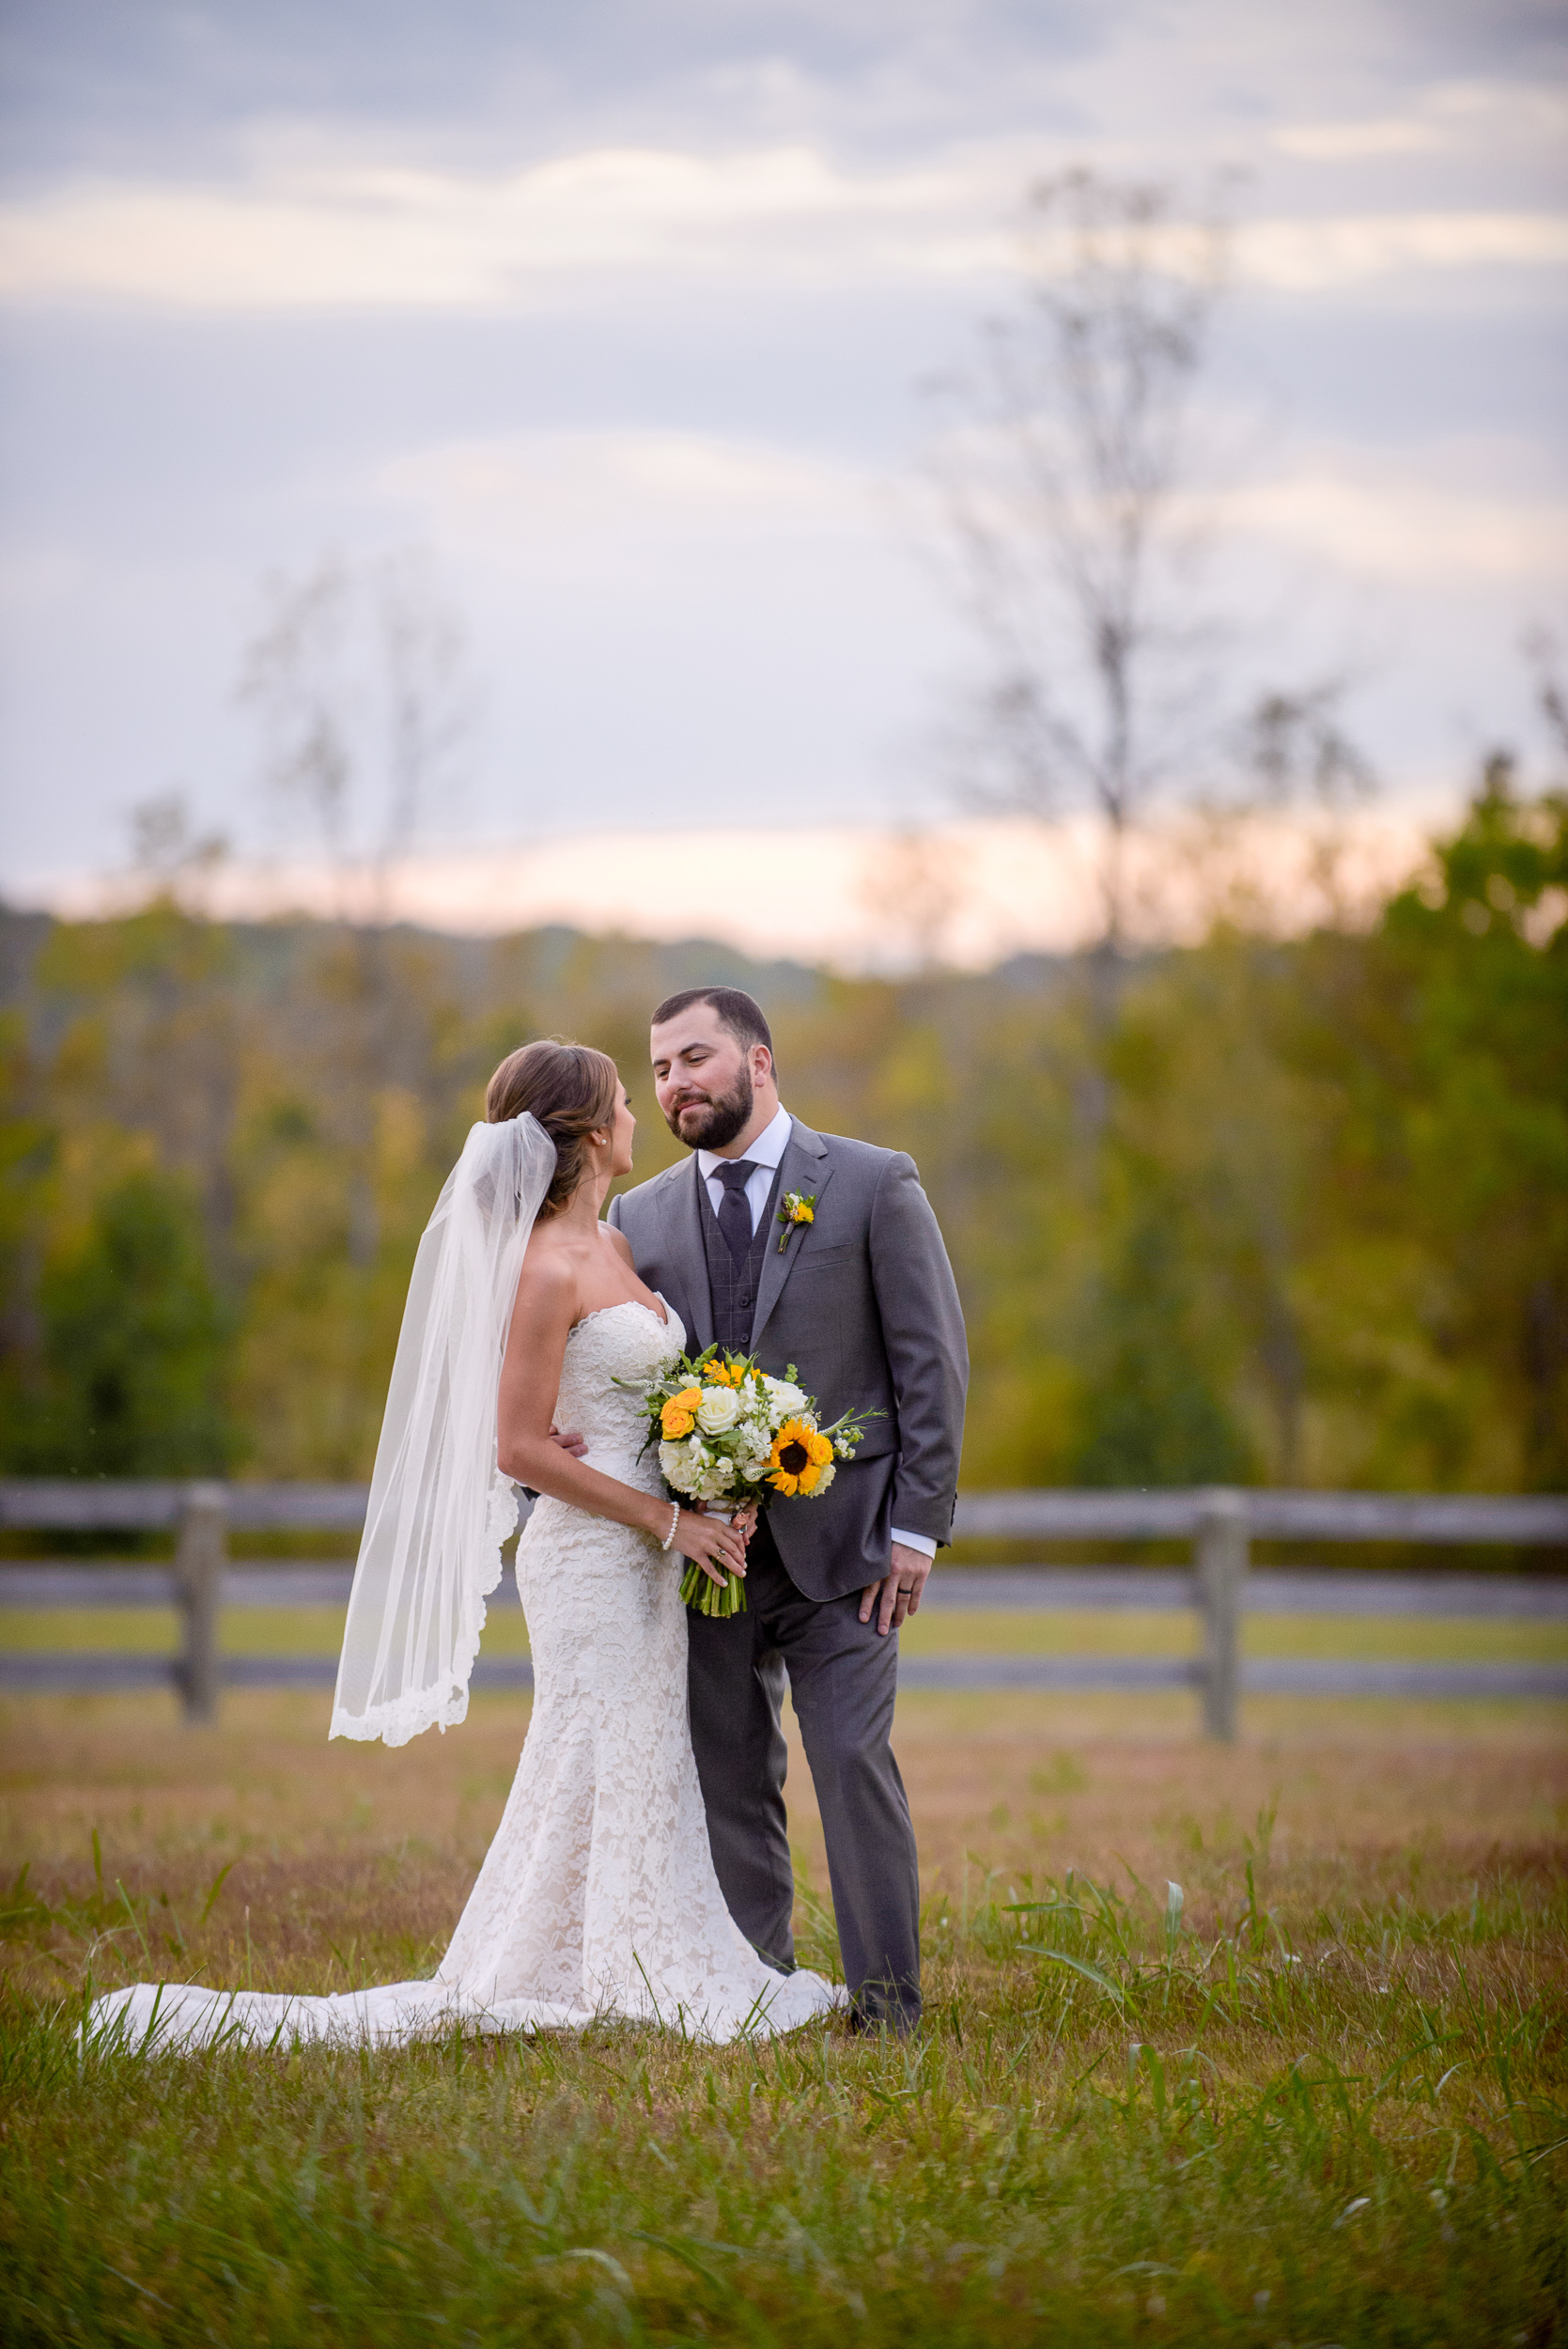 Greg and Jess Photography Mint Springs Farm Nashville Wedding Photographer-31.jpg